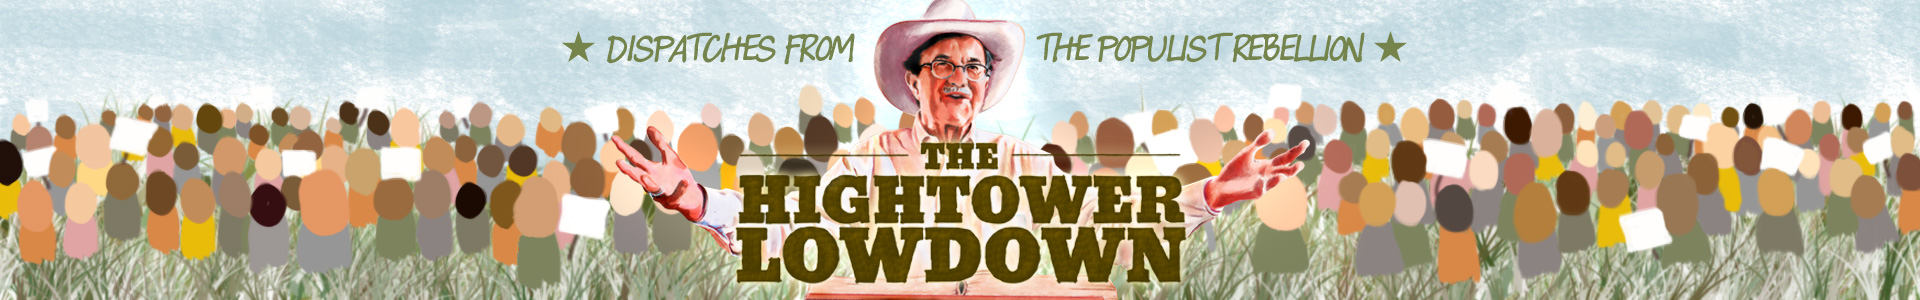 Hightower Lowdown logo